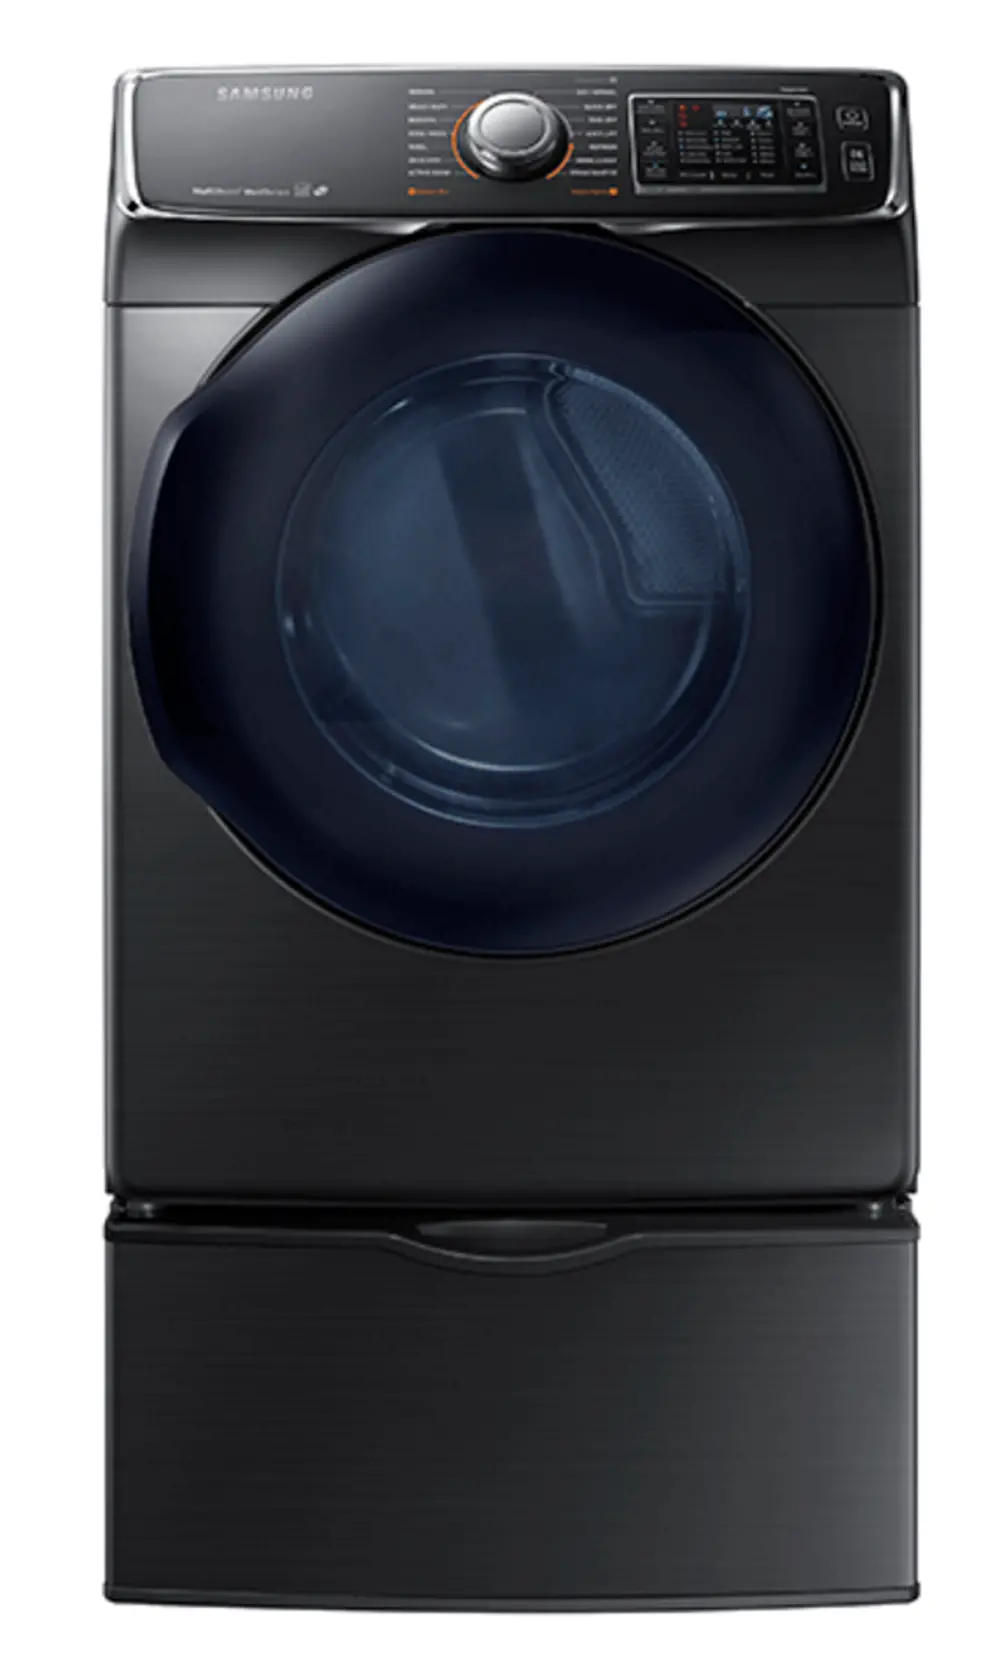 DV50K7500GV Samsung Gas Dryer - 7.5 cu. ft. Black Stainless Steel-1